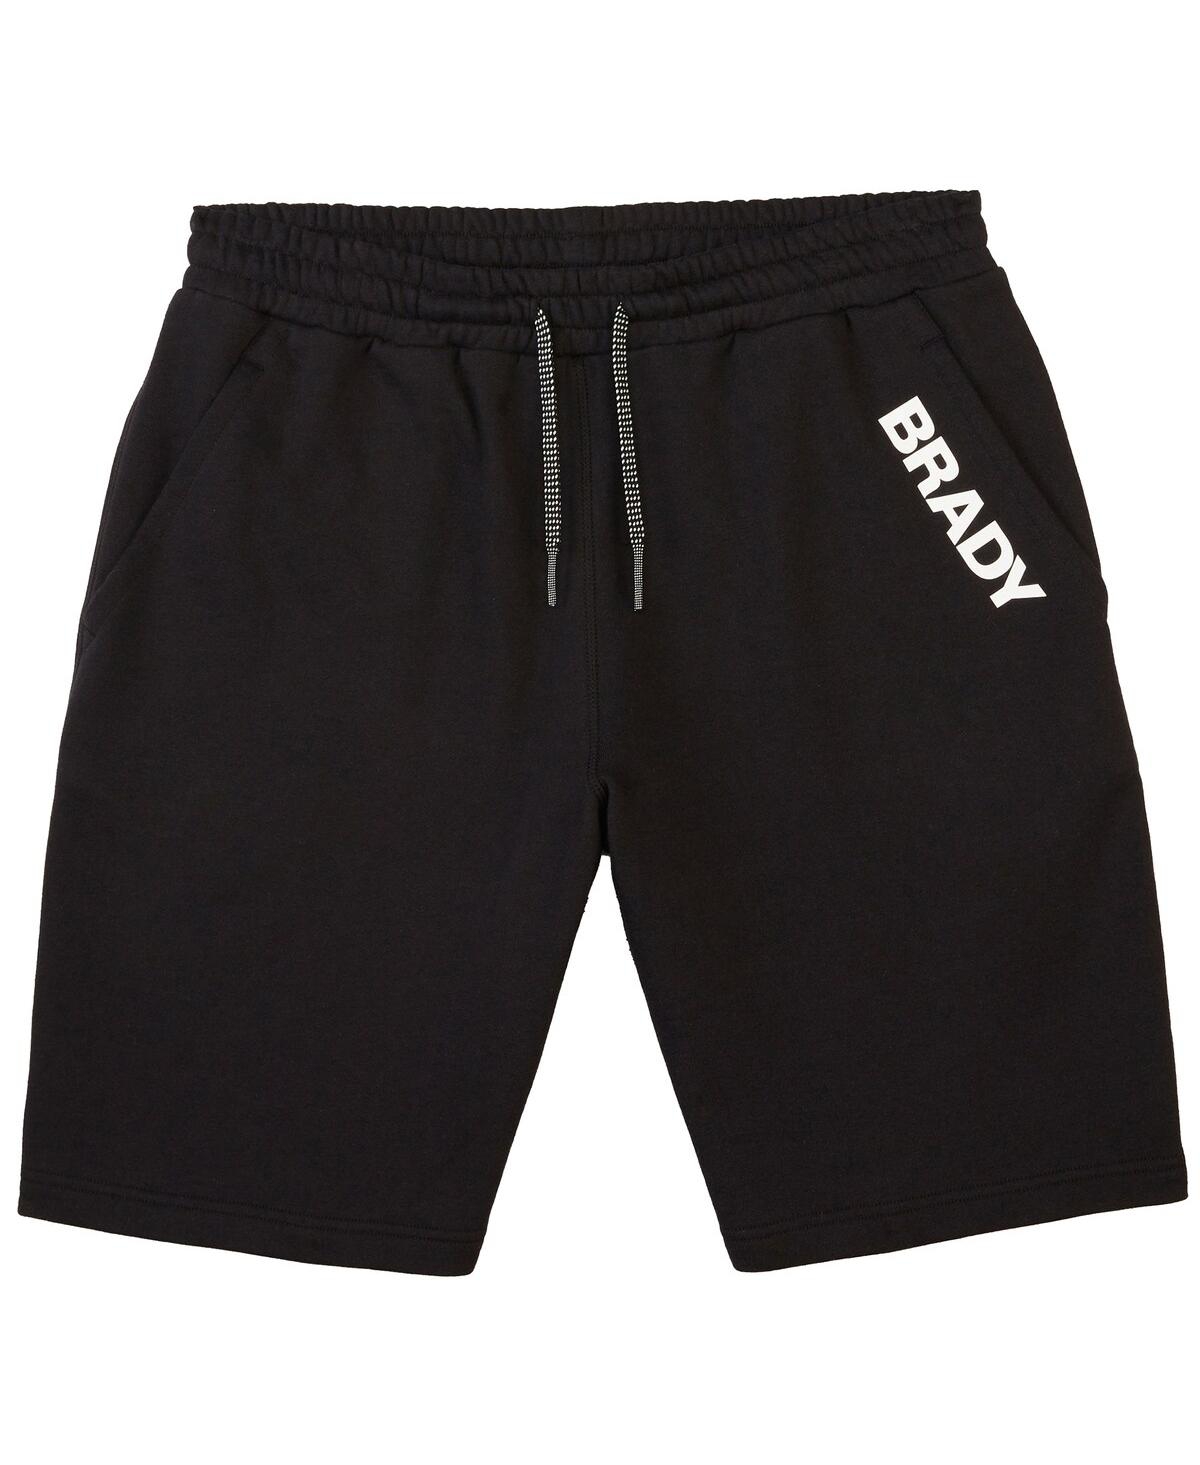 Men's Brady Black Wordmark Fleece Shorts - Black